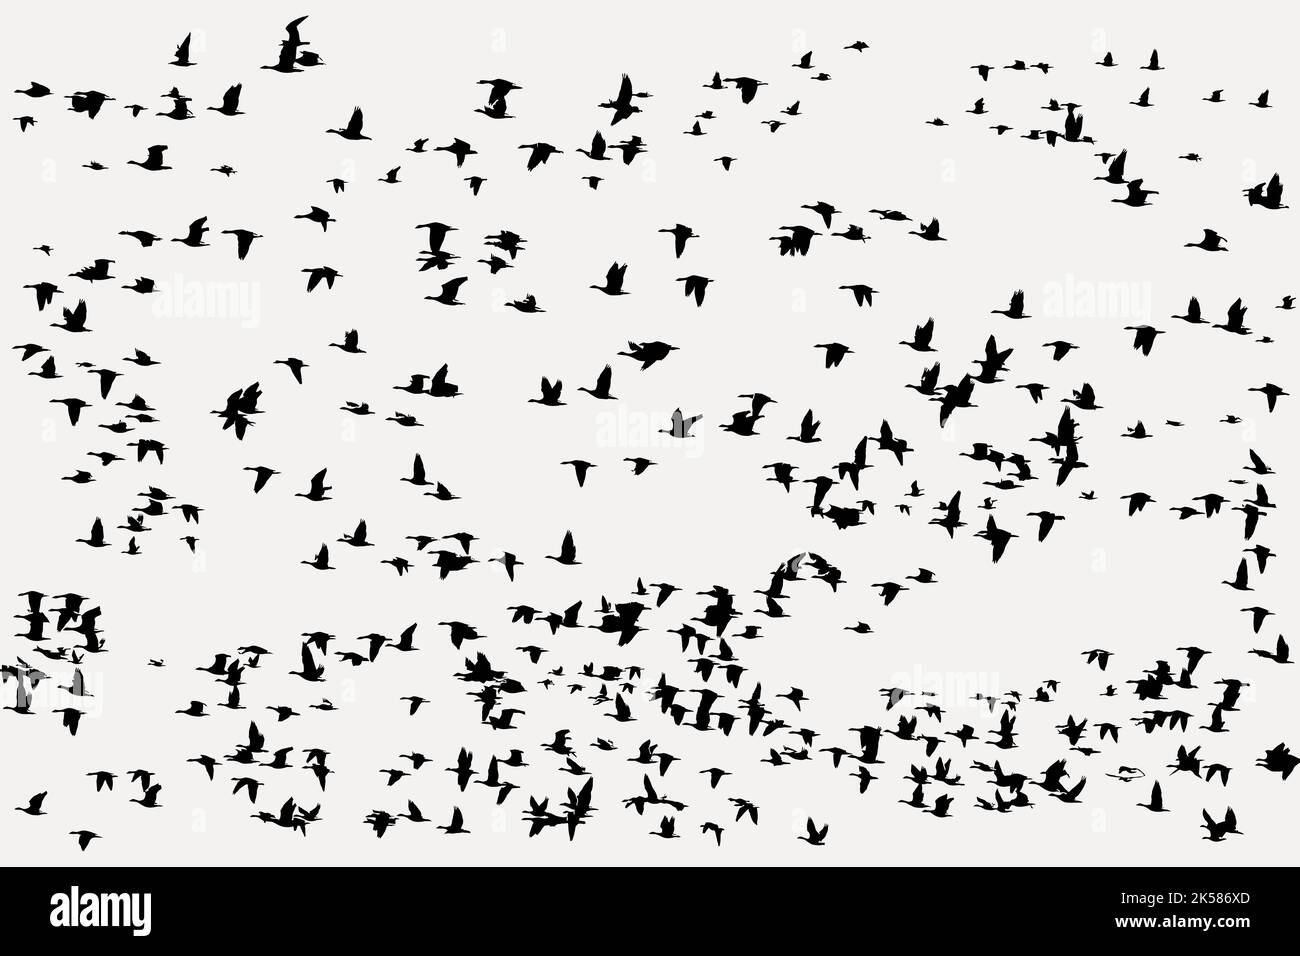 Flying birds silhouette background, animal illustration in black vector ...